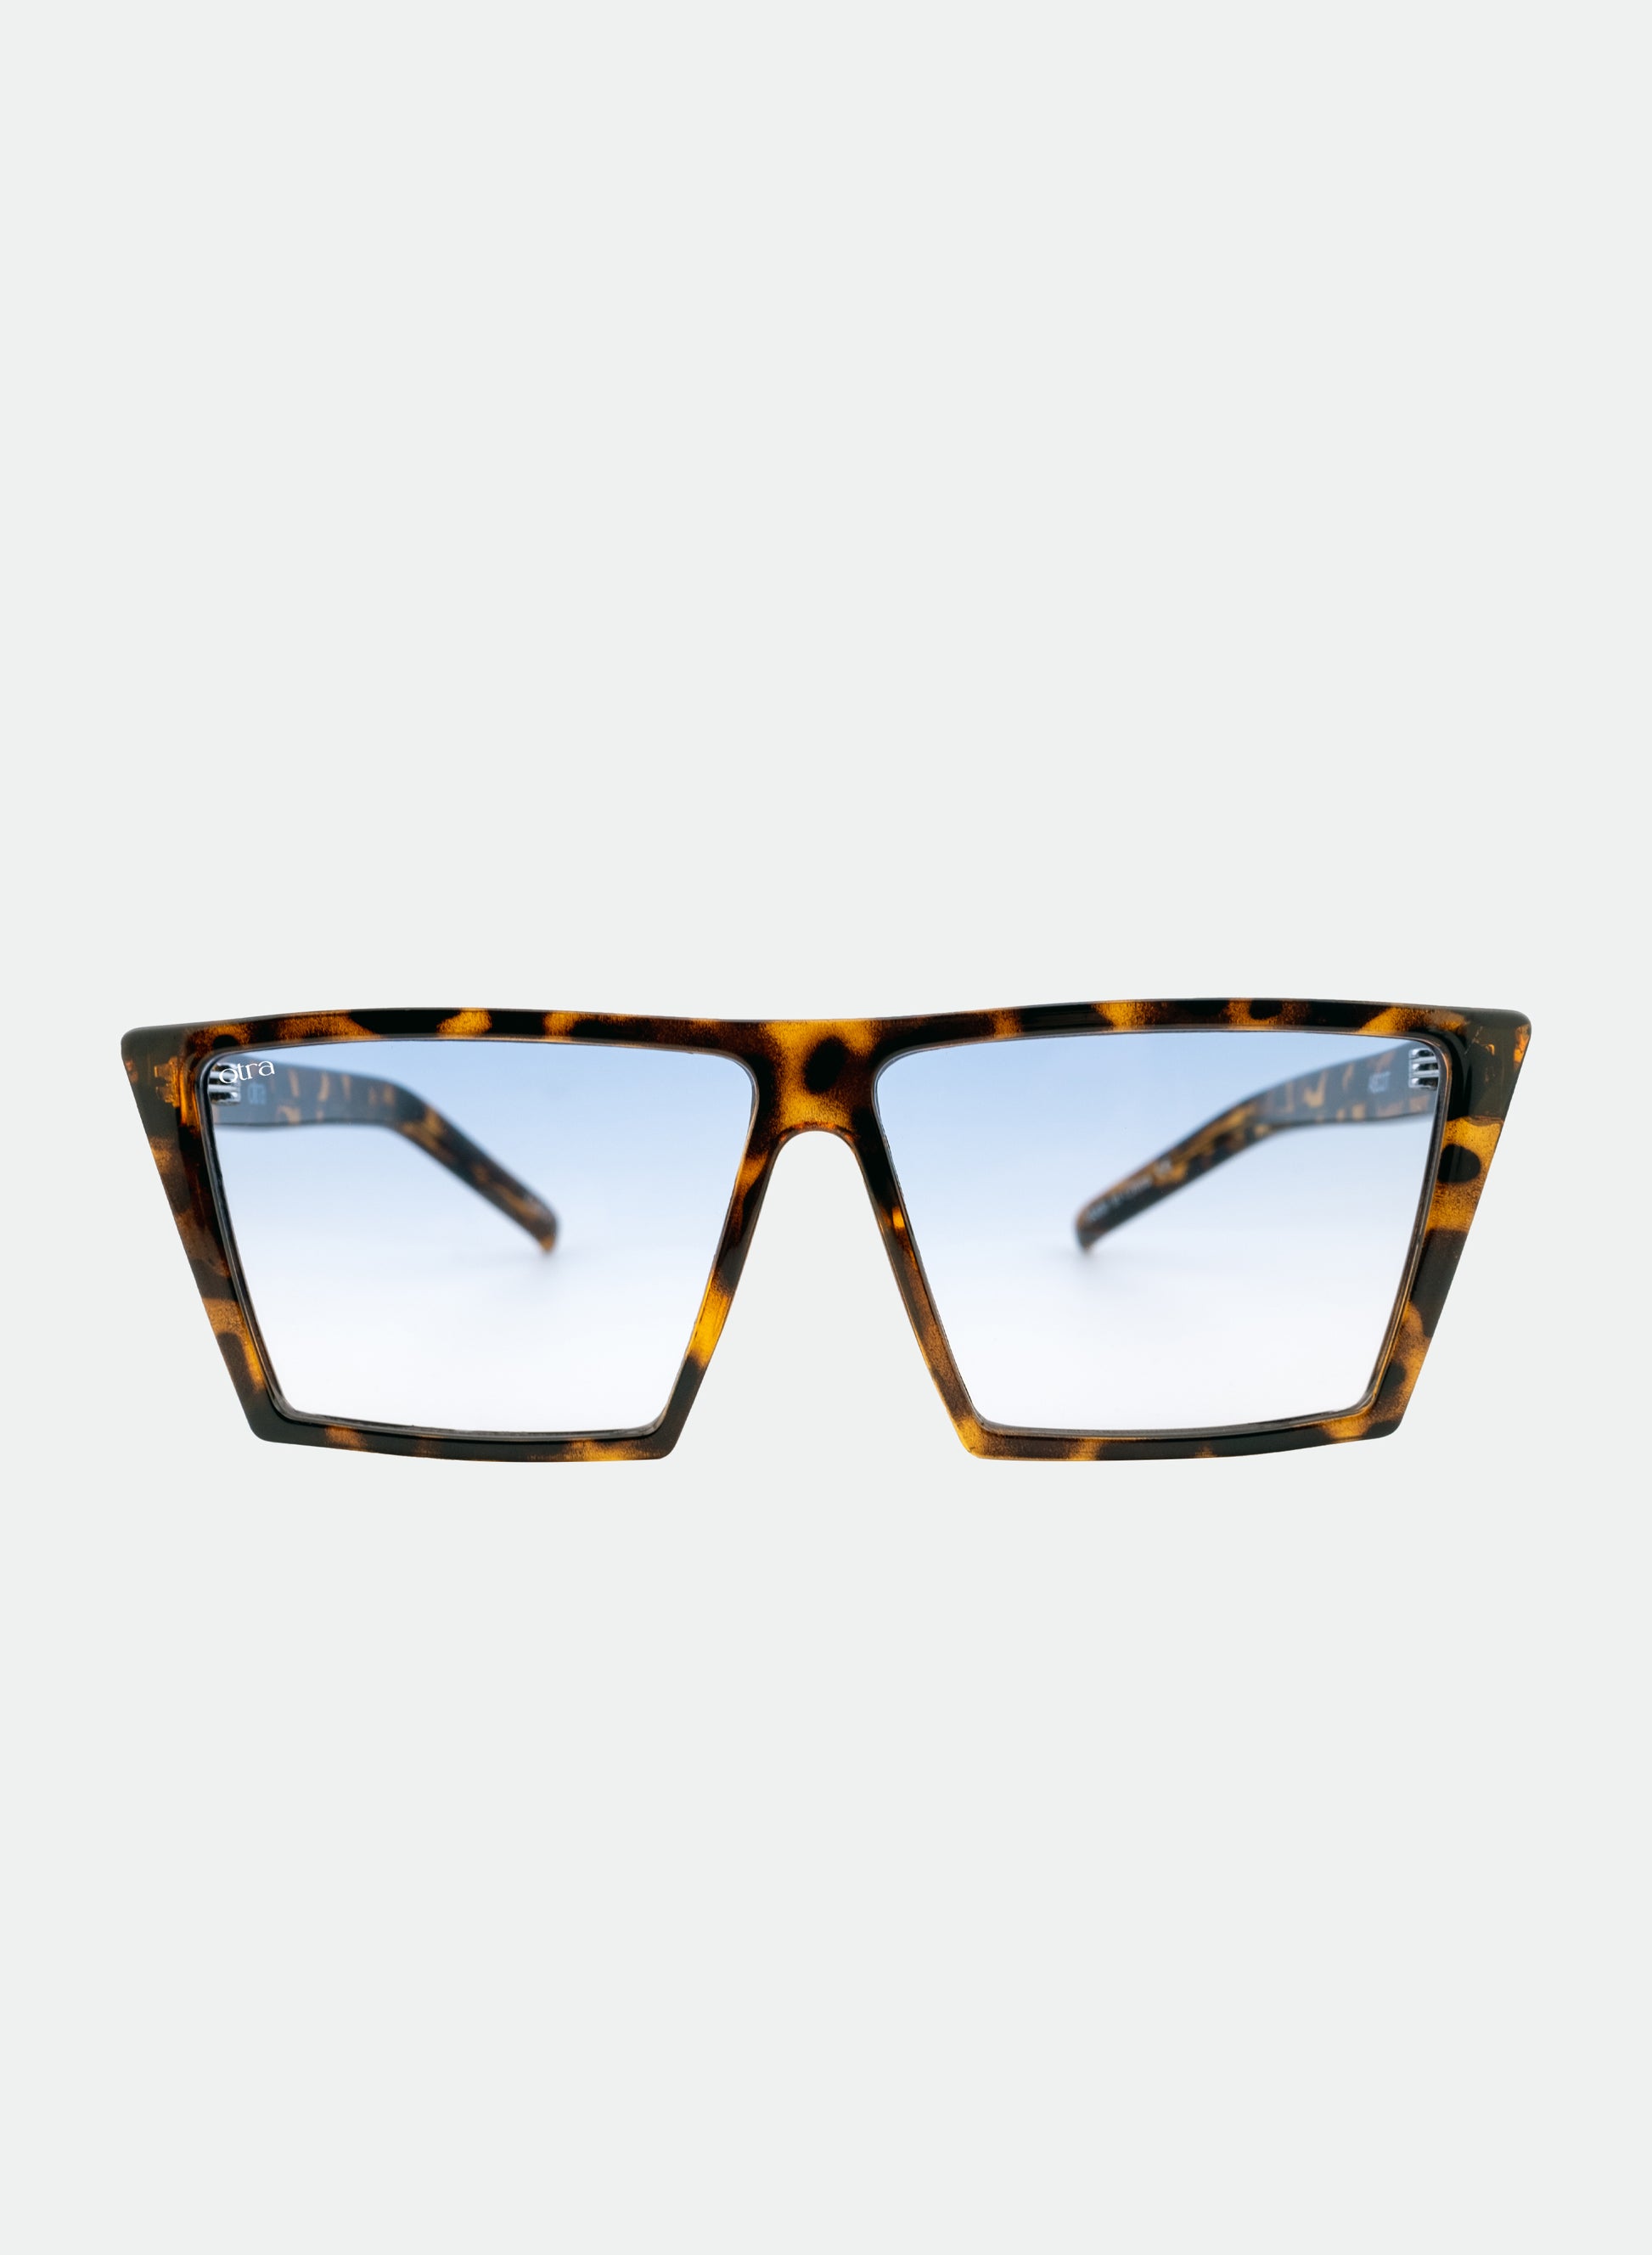 Ascot sunglasses with blue lens